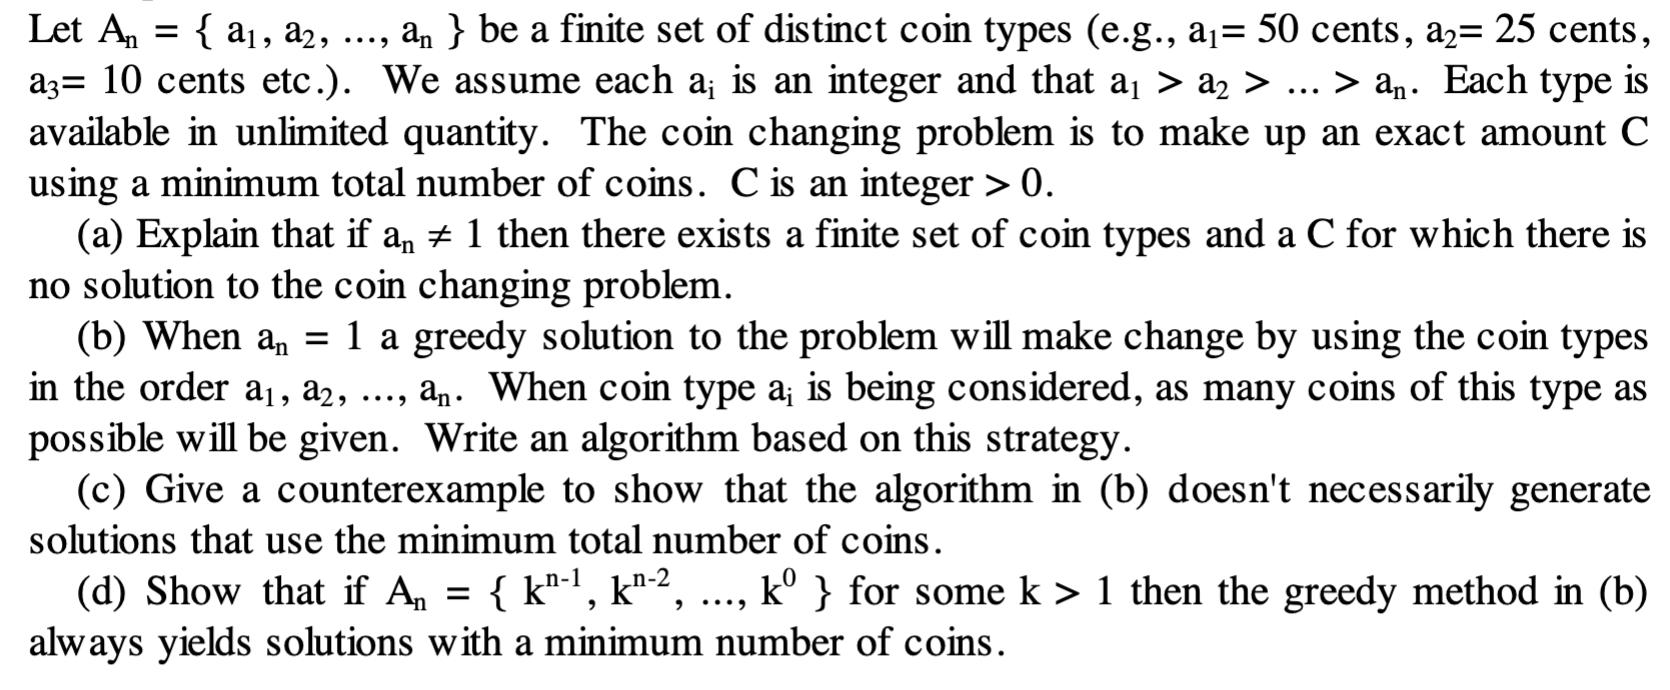 ... Let An = {a, a2, ..., an} be a finite set of distinct coin types (e.g., a= 50 cents, a2= 25 cents, a3= 10